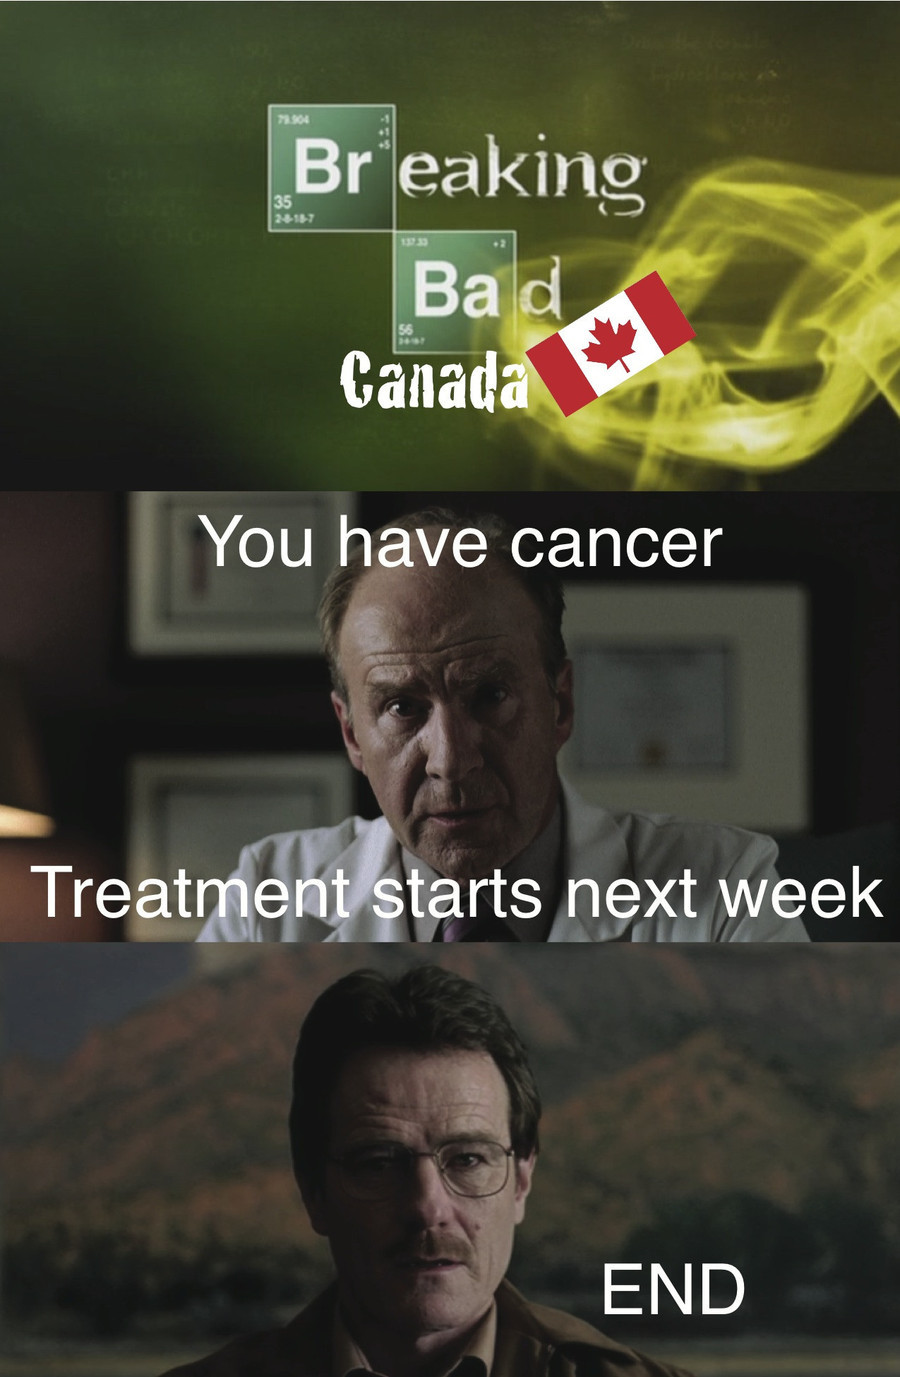 Breaking bad Canada edition